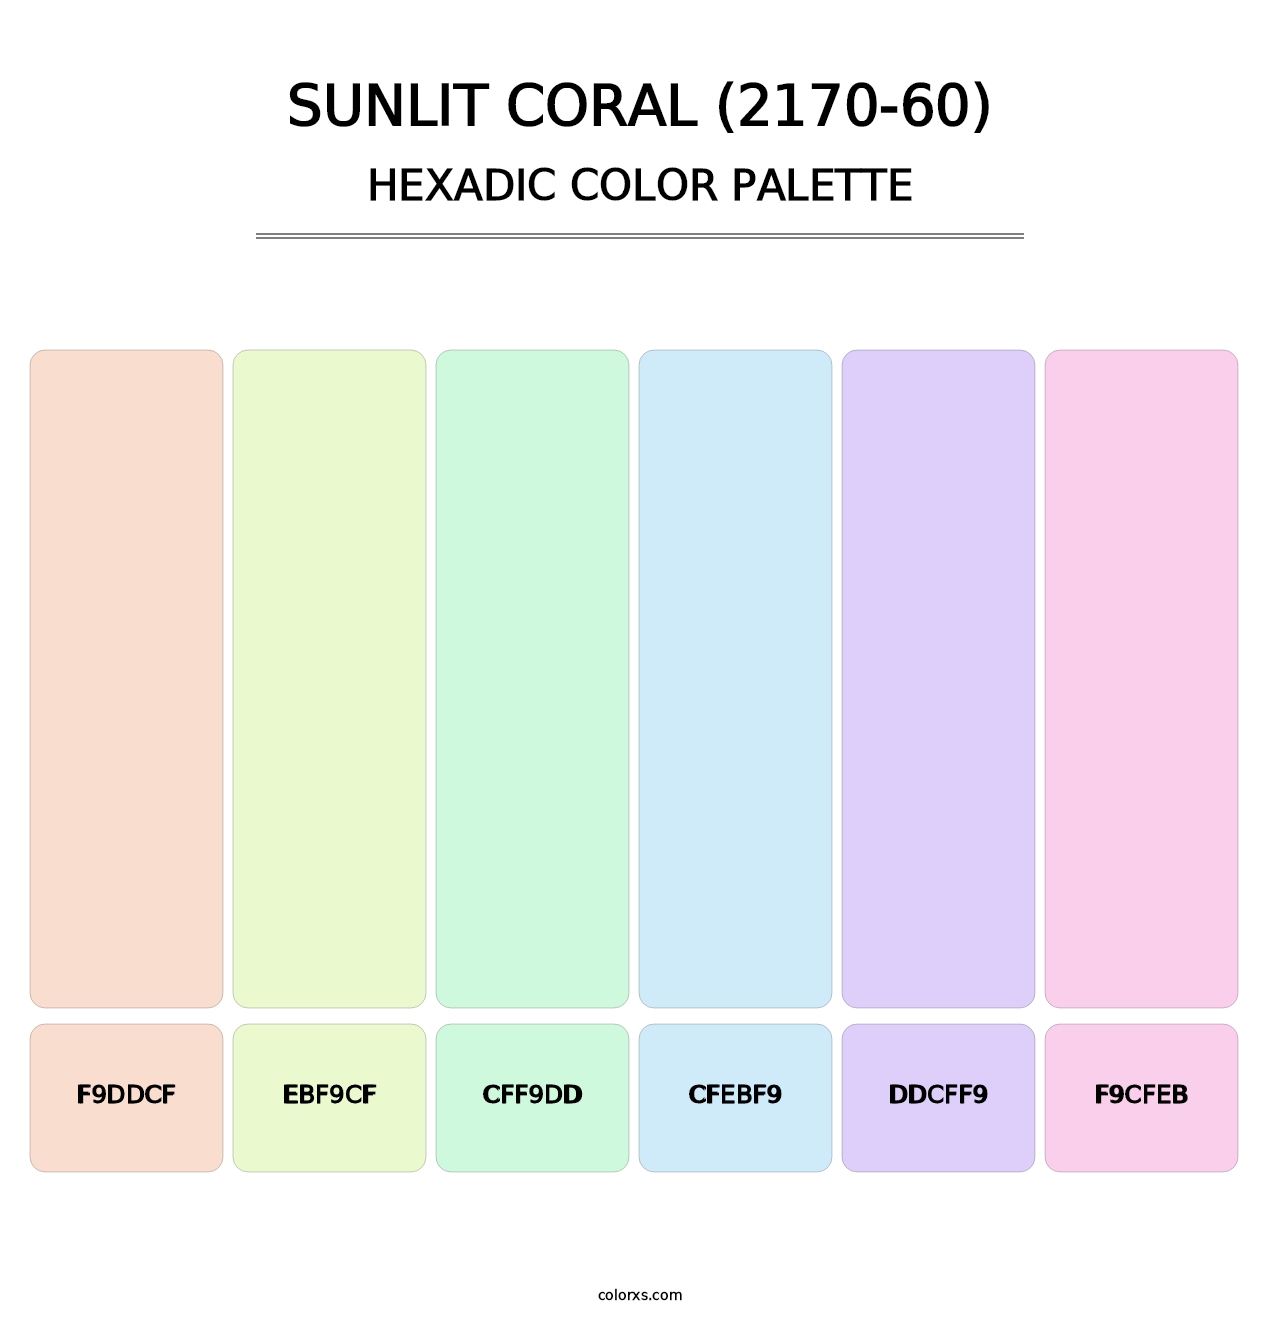 Sunlit Coral (2170-60) - Hexadic Color Palette